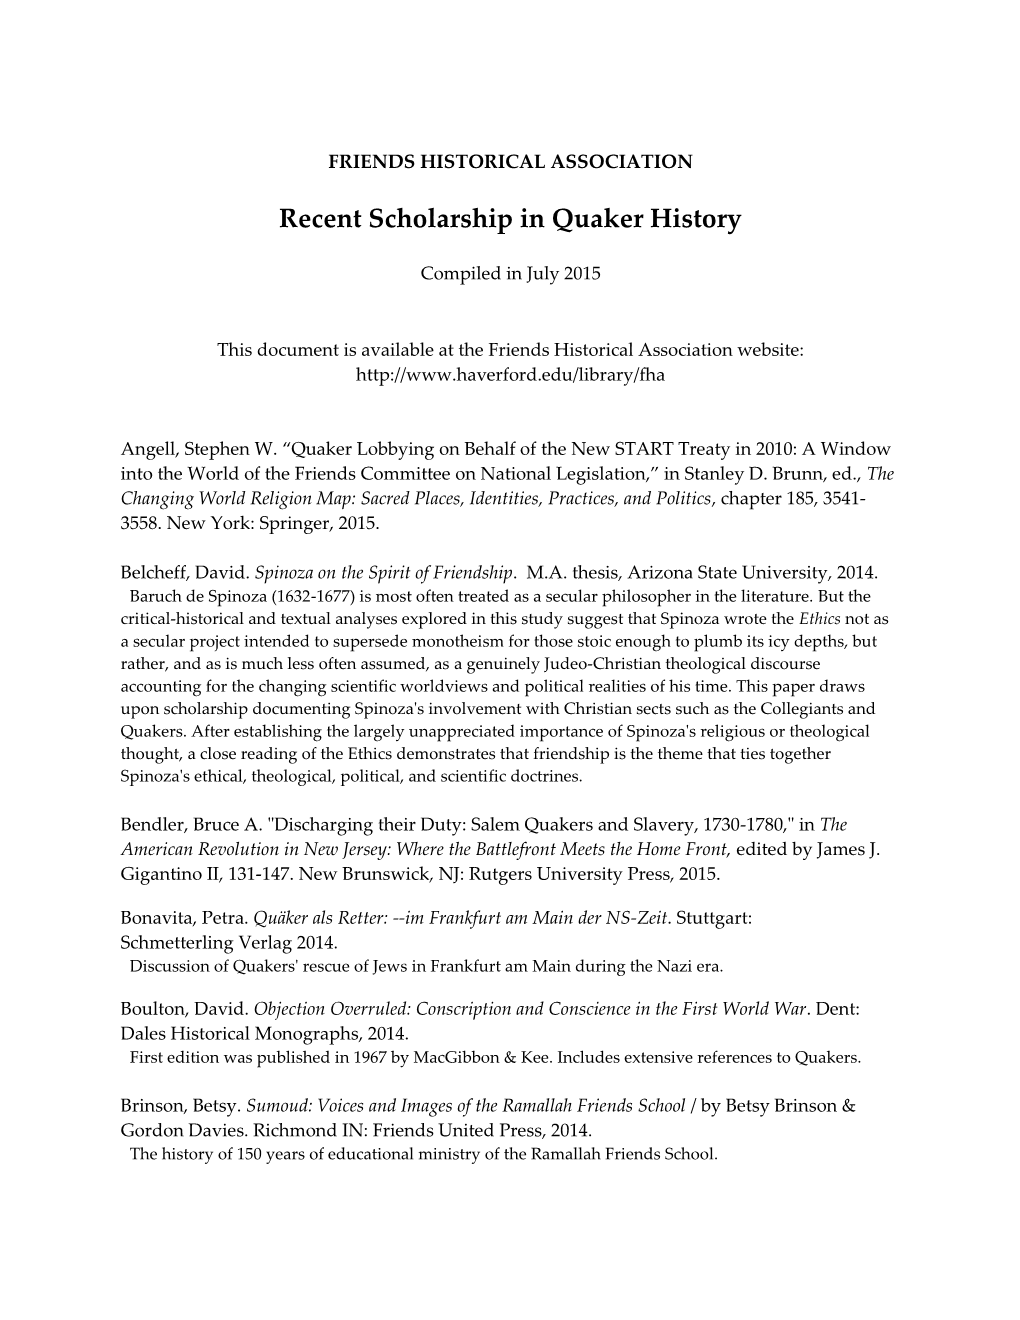 Recent Scholarship in Quaker History